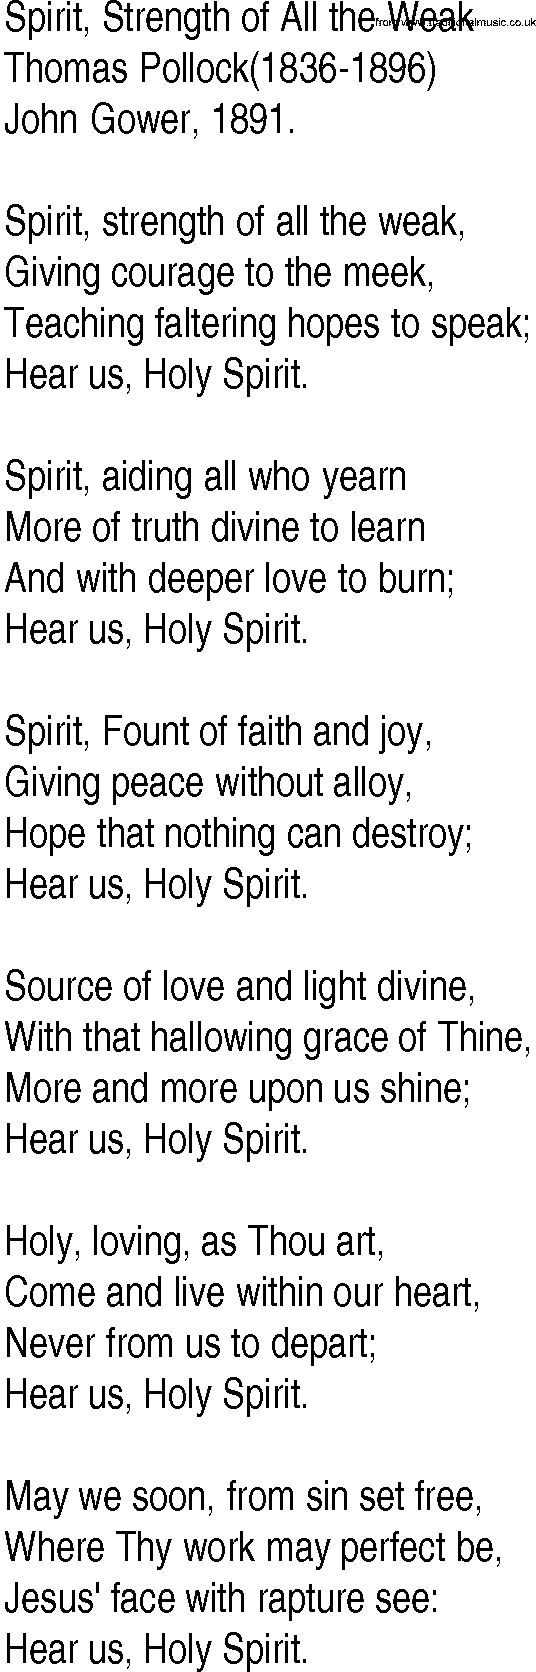 Hymn and Gospel Song: Spirit, Strength of All the Weak by Thomas Pollock lyrics